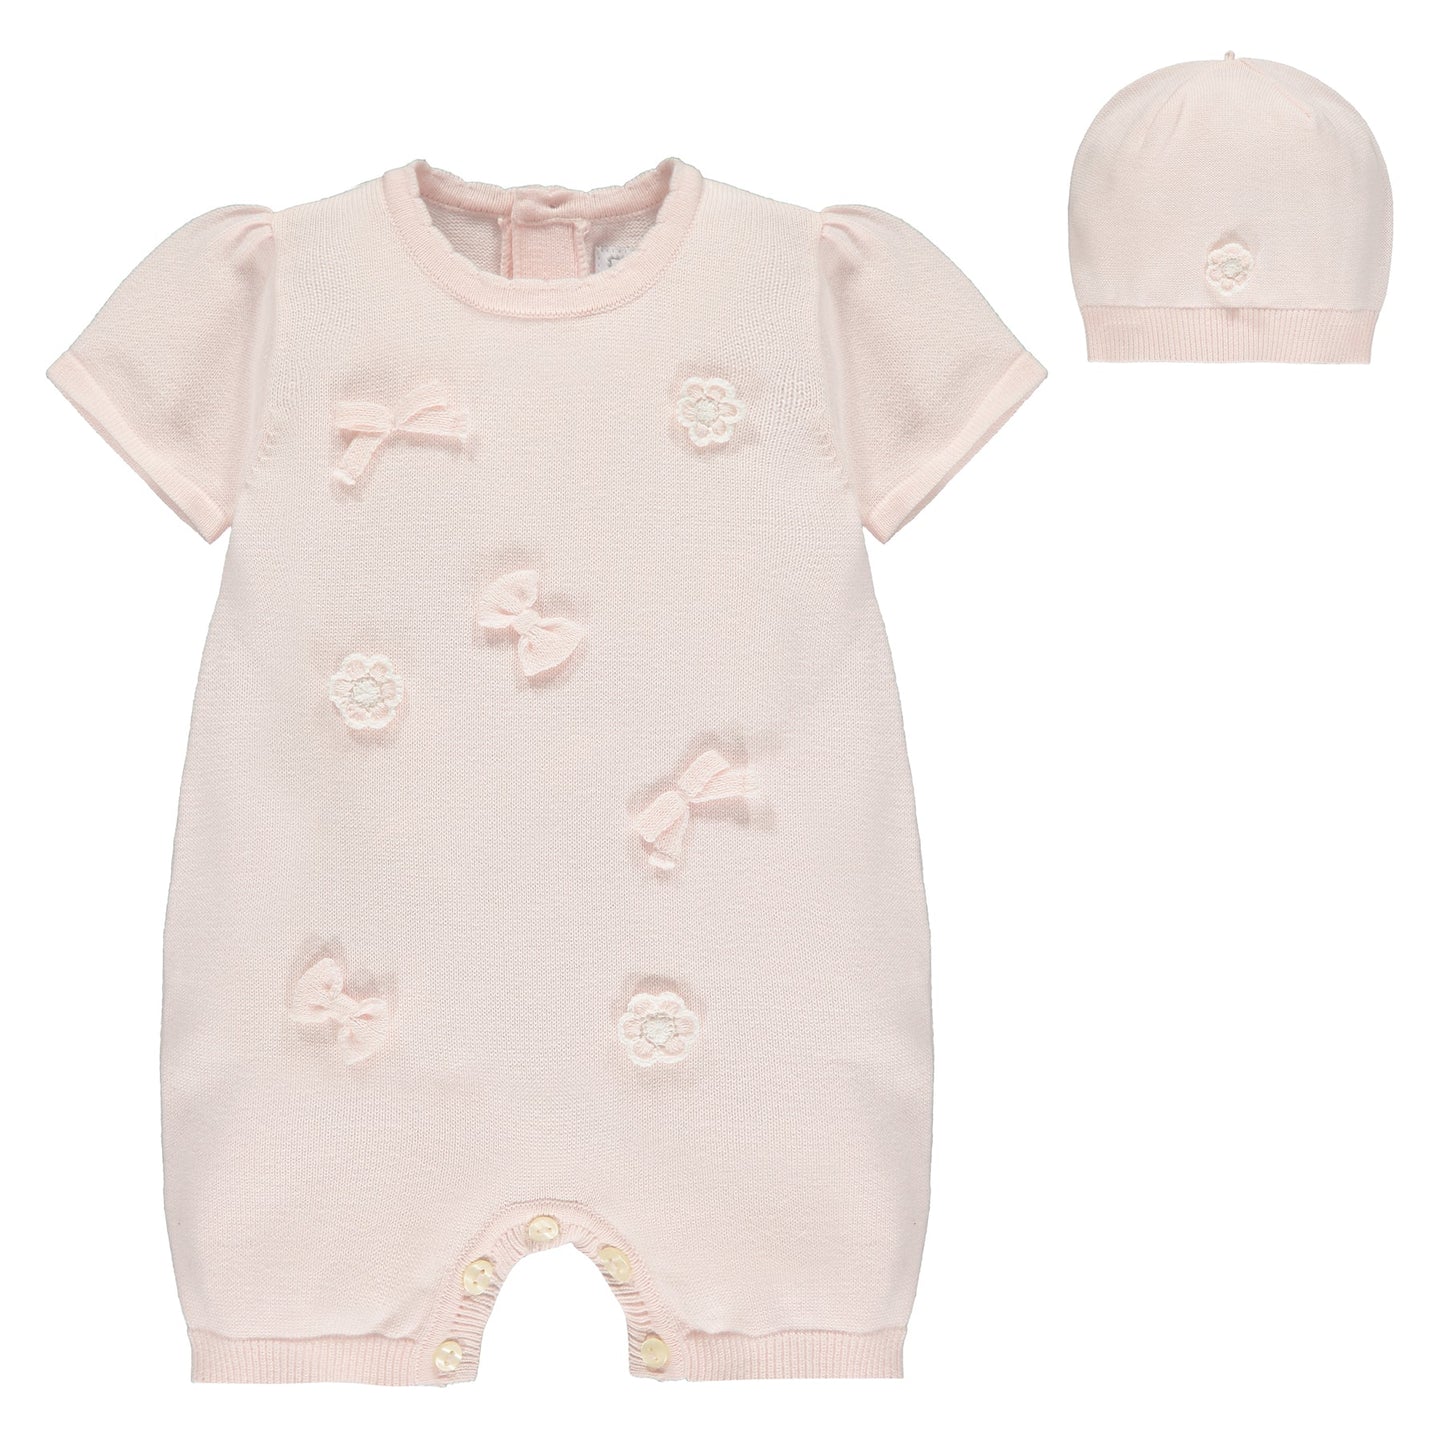 Emile et Rose Baby Girl's Pale Pink Knitted Short Romper & Hat